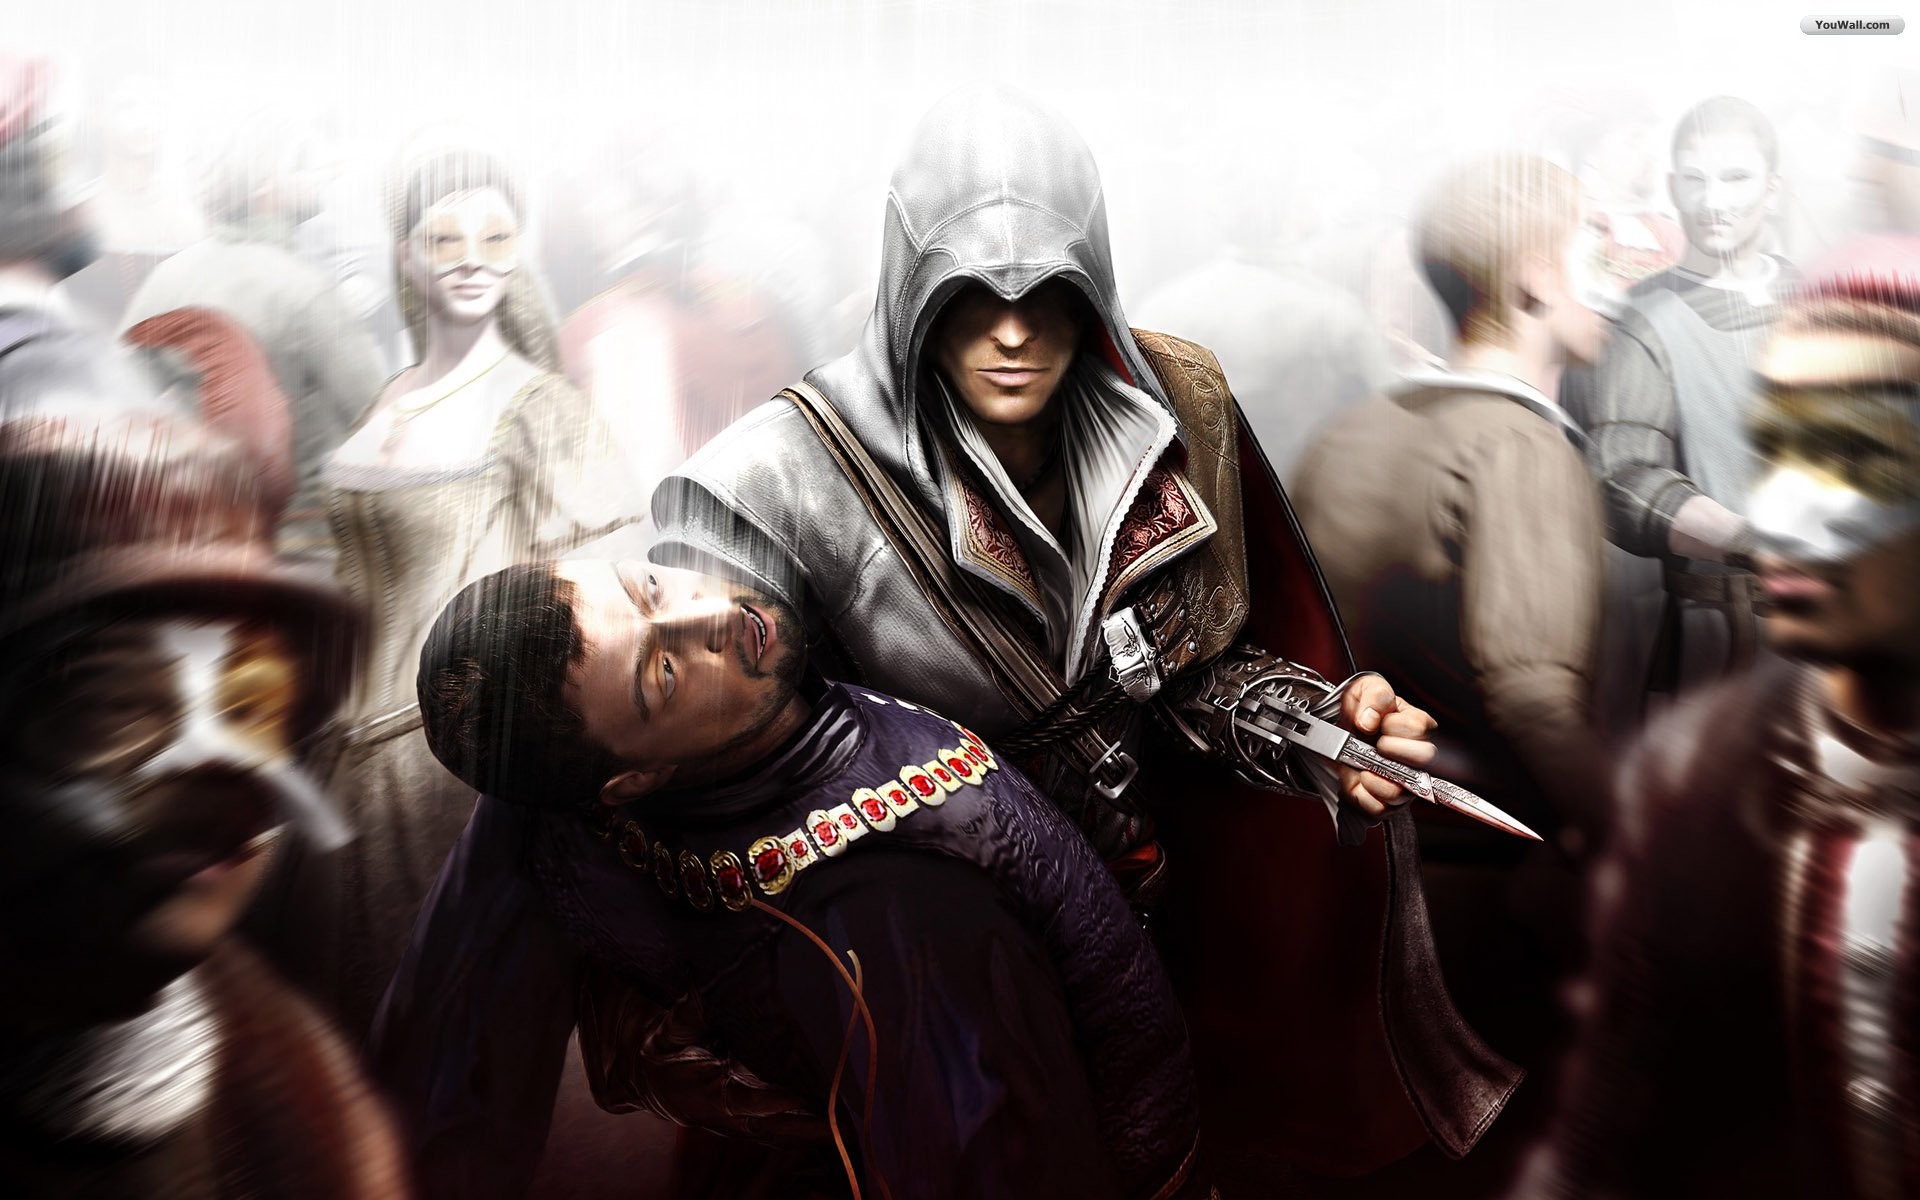 1920x1200 Image - Assassins creed brotherhood wallpaper 3c844.jpg | Assassin's Creed  Wiki | FANDOM powered by Wikia